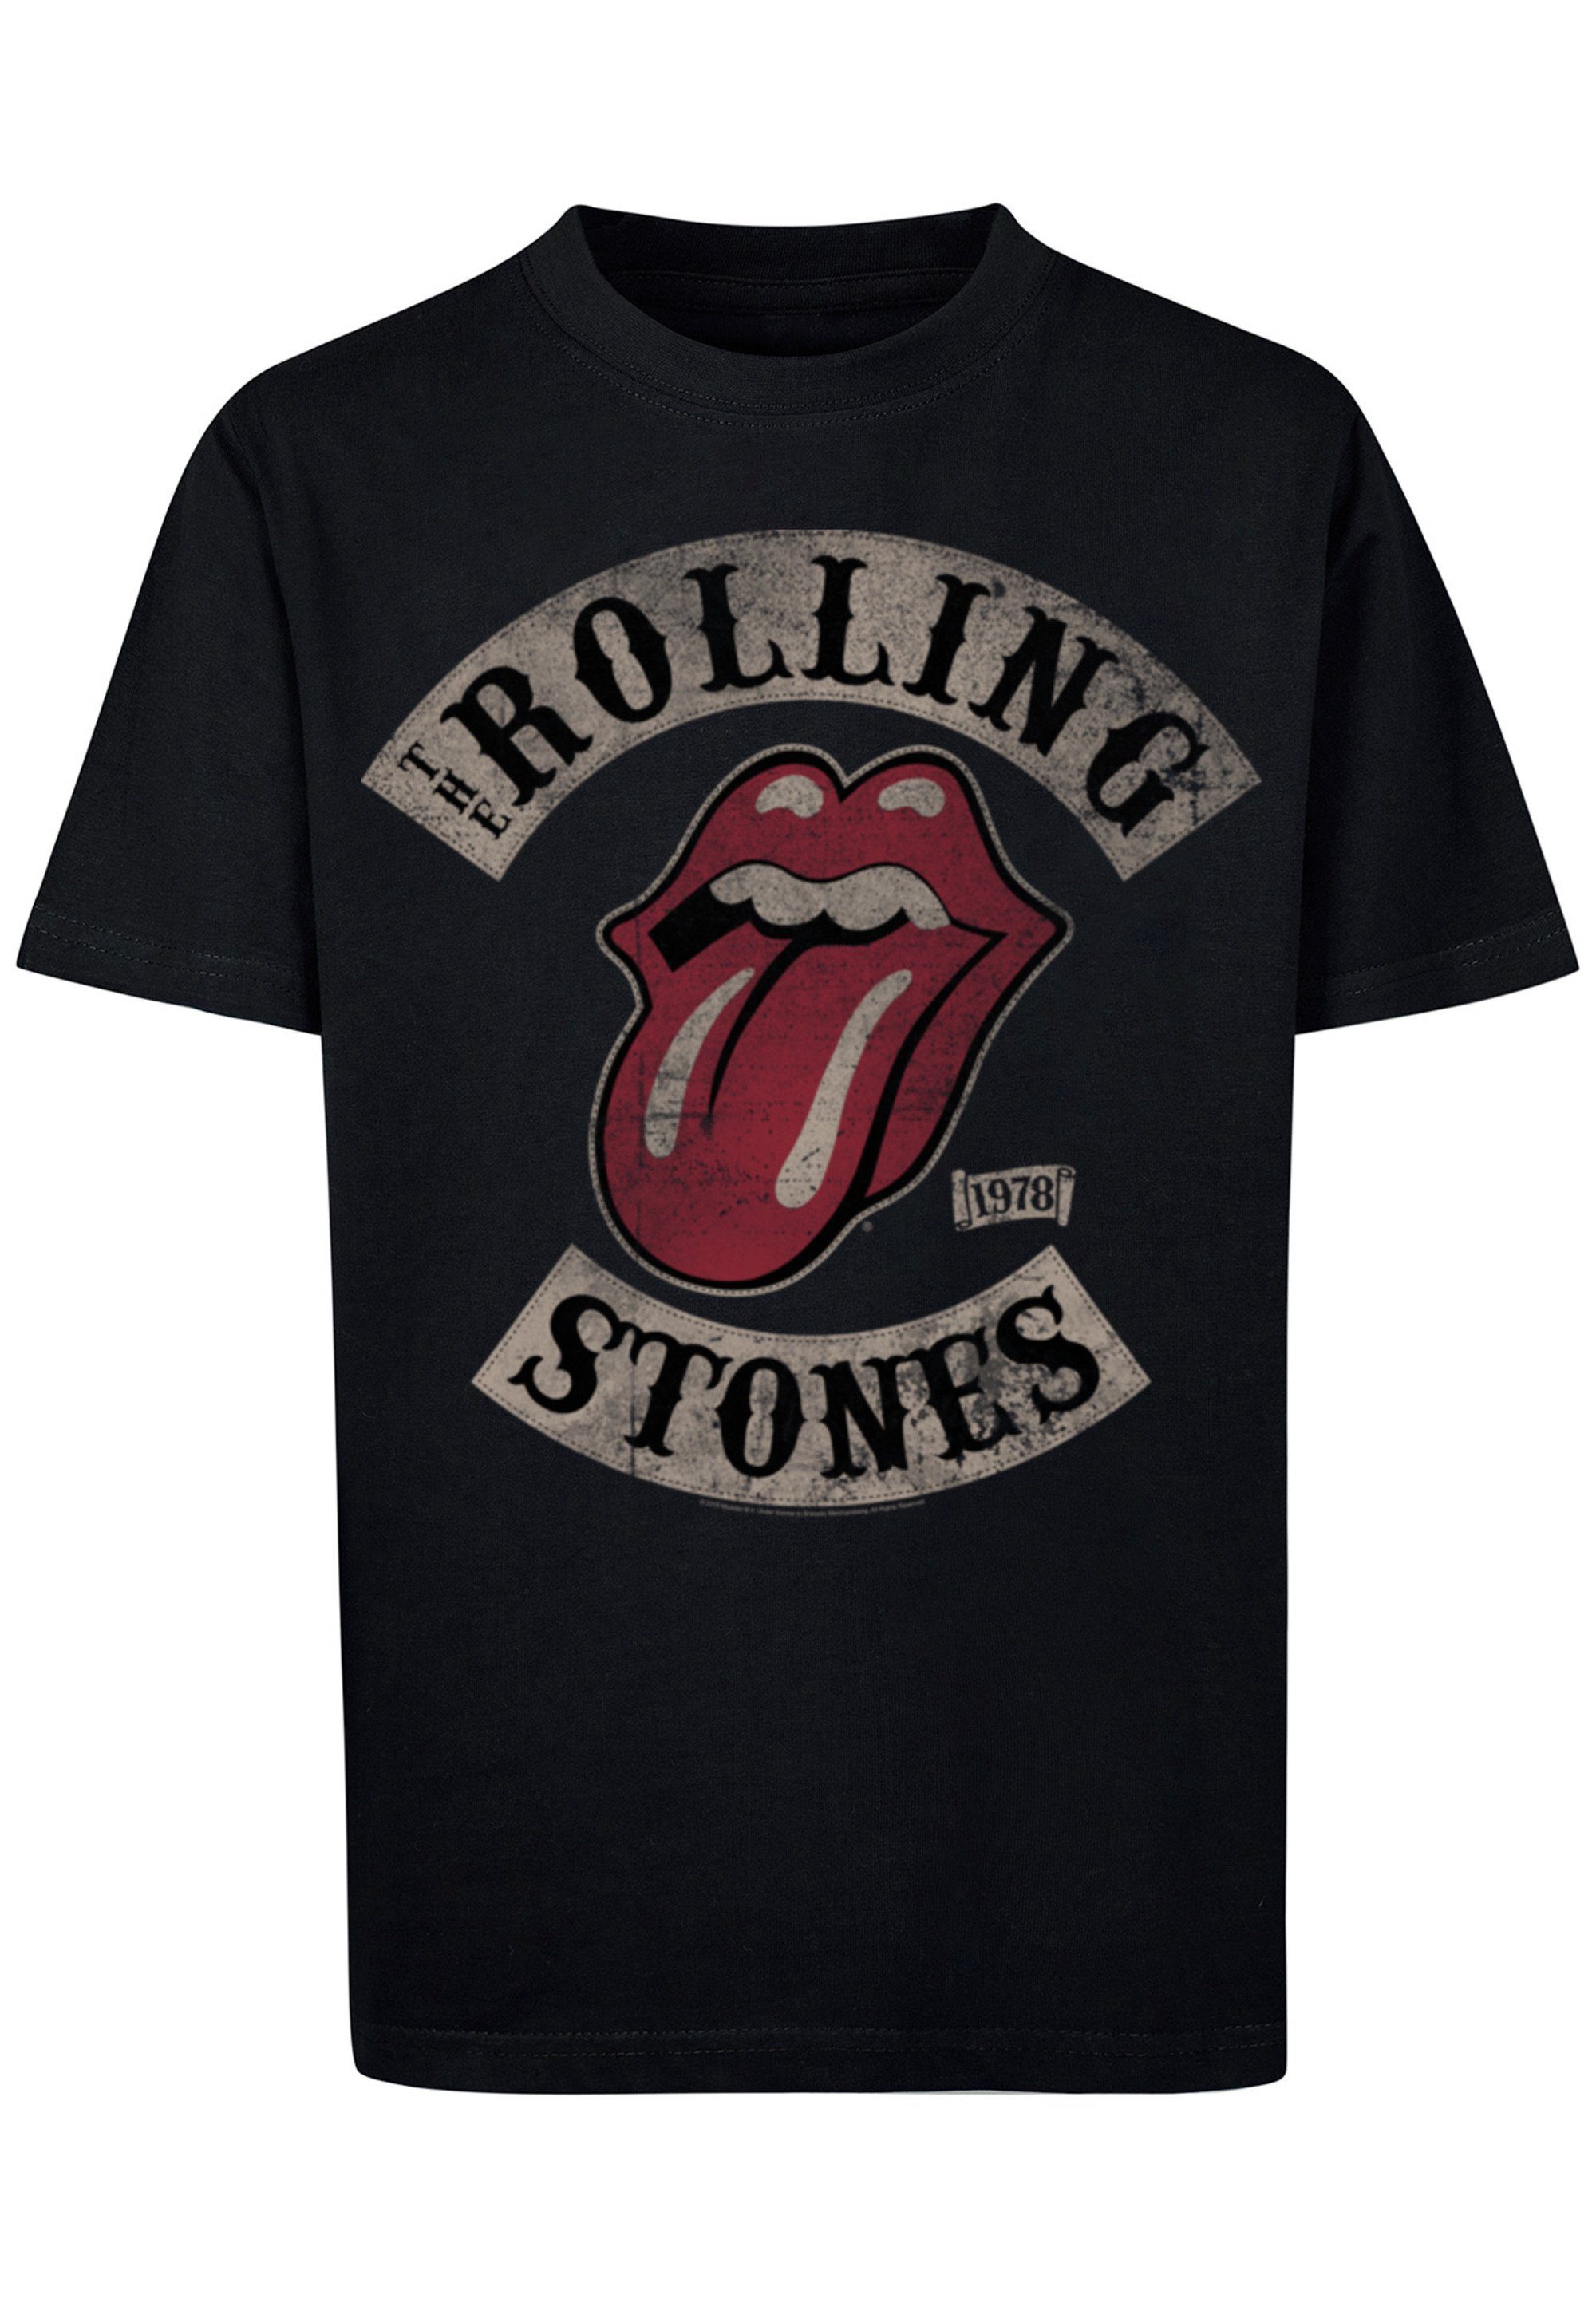 The Tour Stones '78 Rolling Black T-Shirt Rockband F4NT4STIC Print schwarz